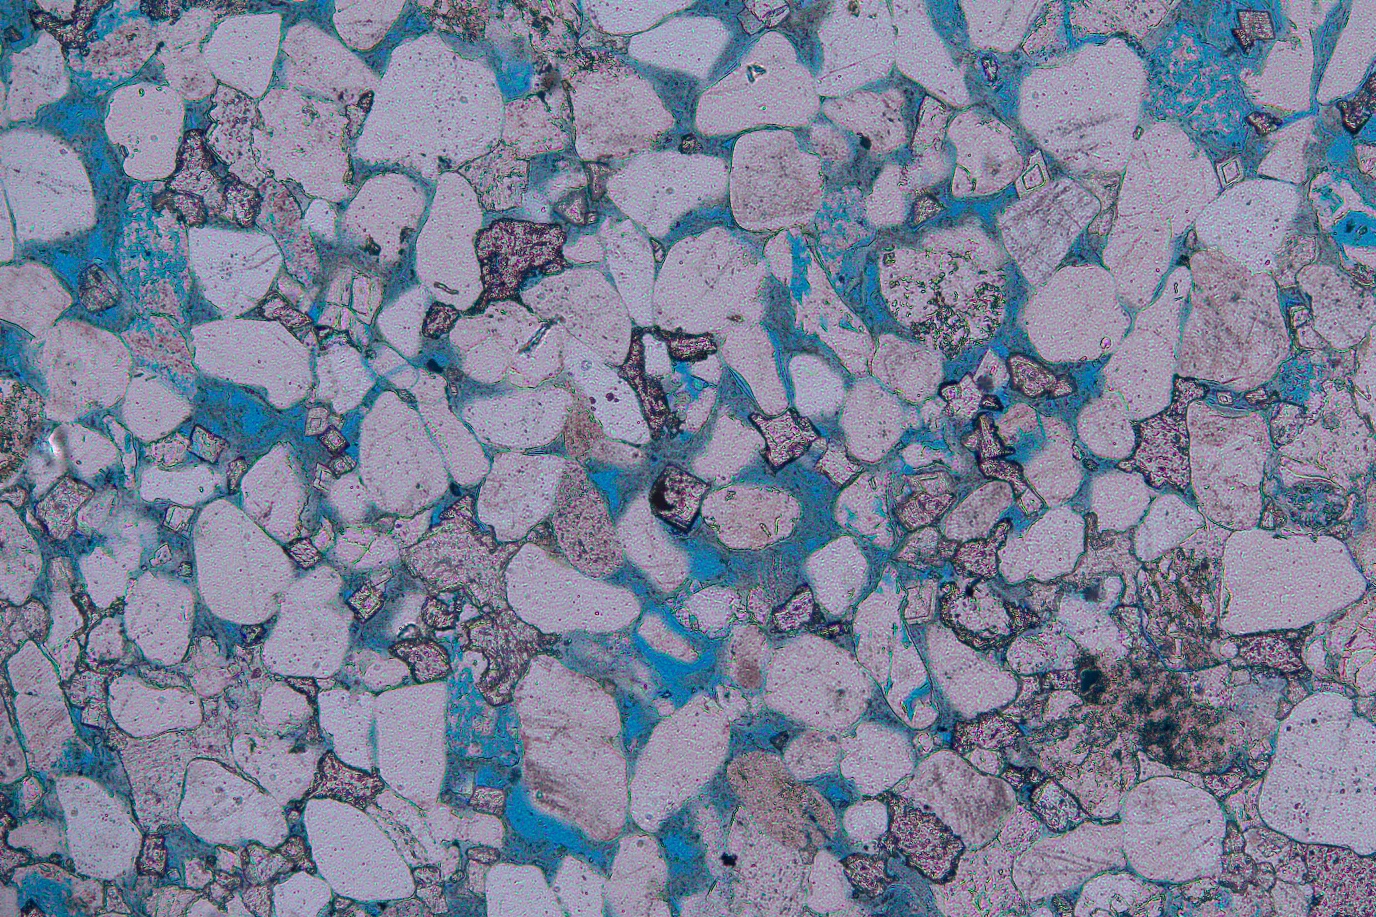 Microscopic image of mudstone